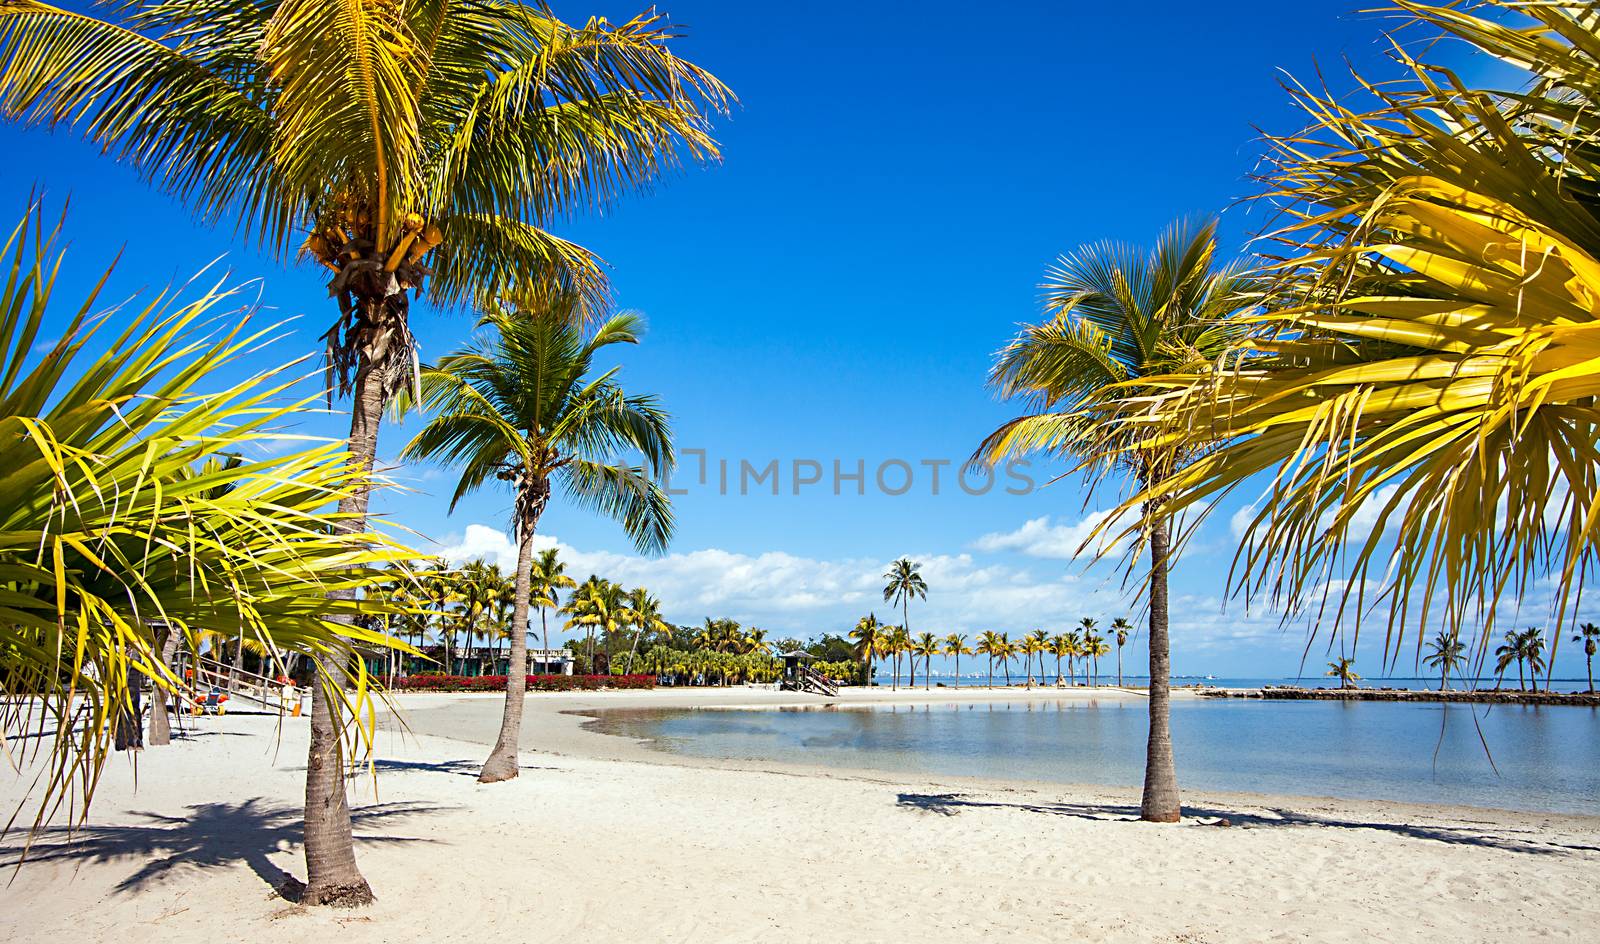 Round Beach in Miami Florida USA by Makeral